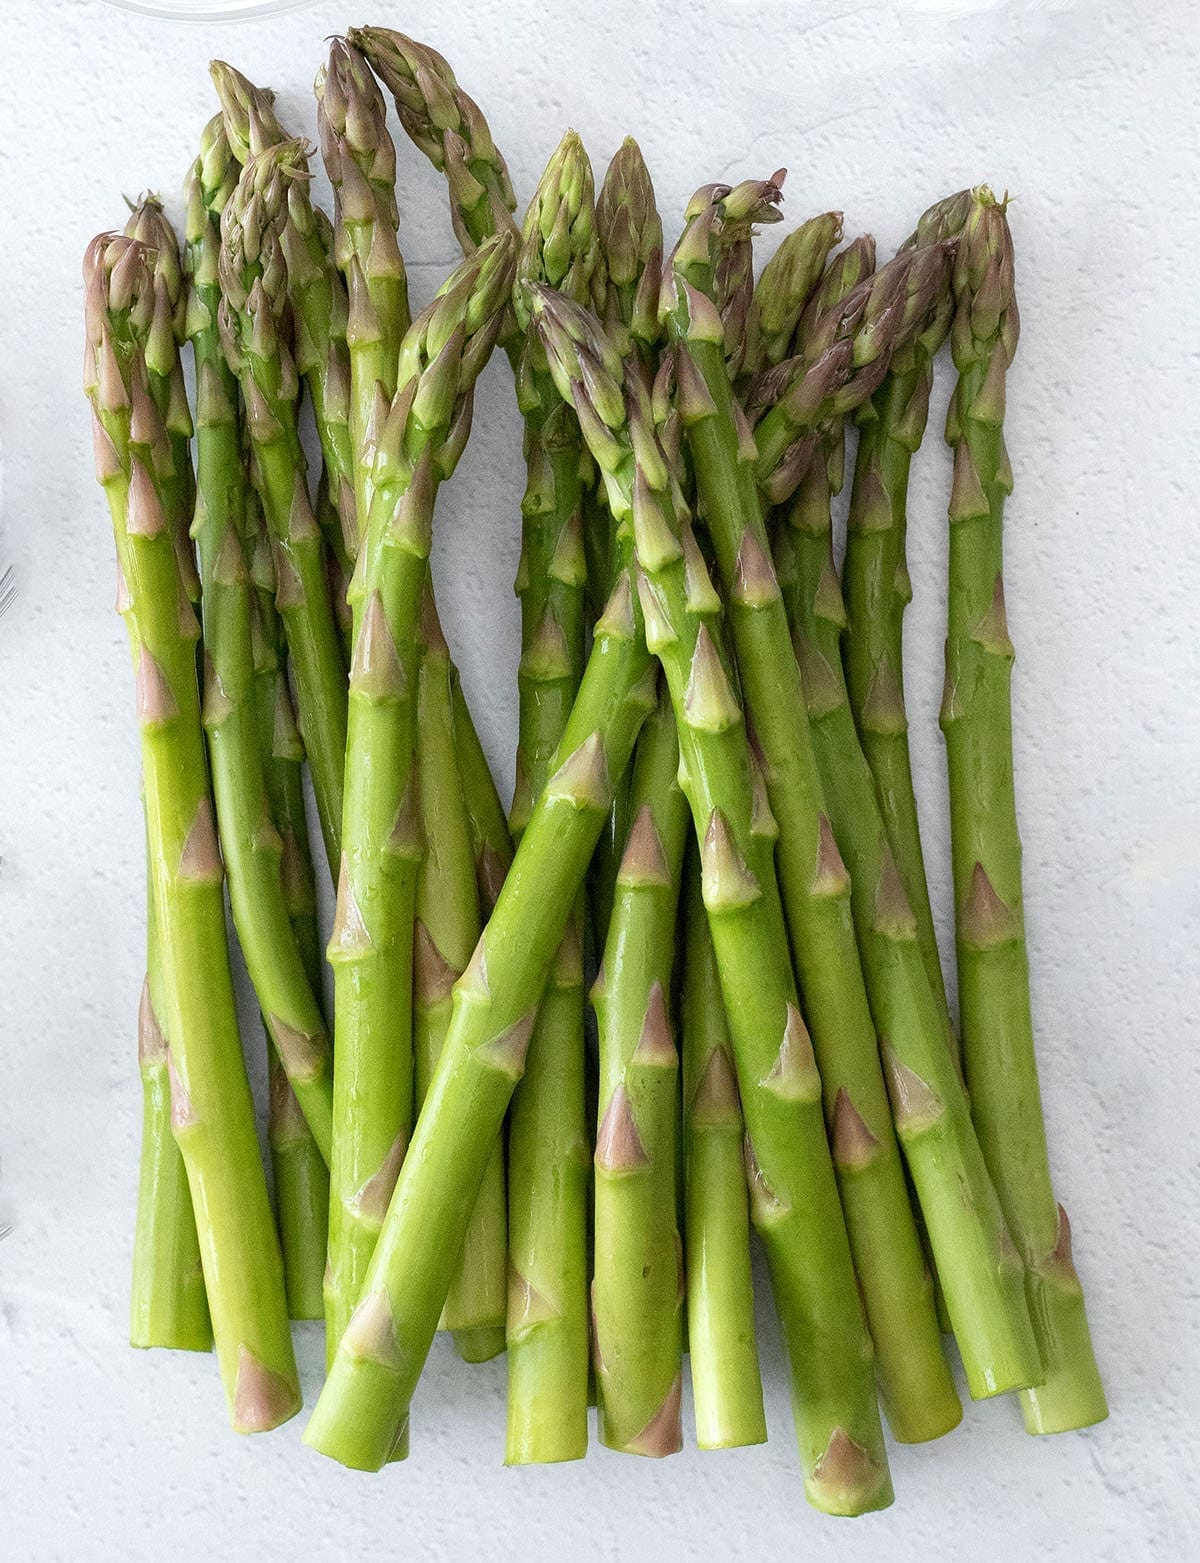 Group of asparagus spears.